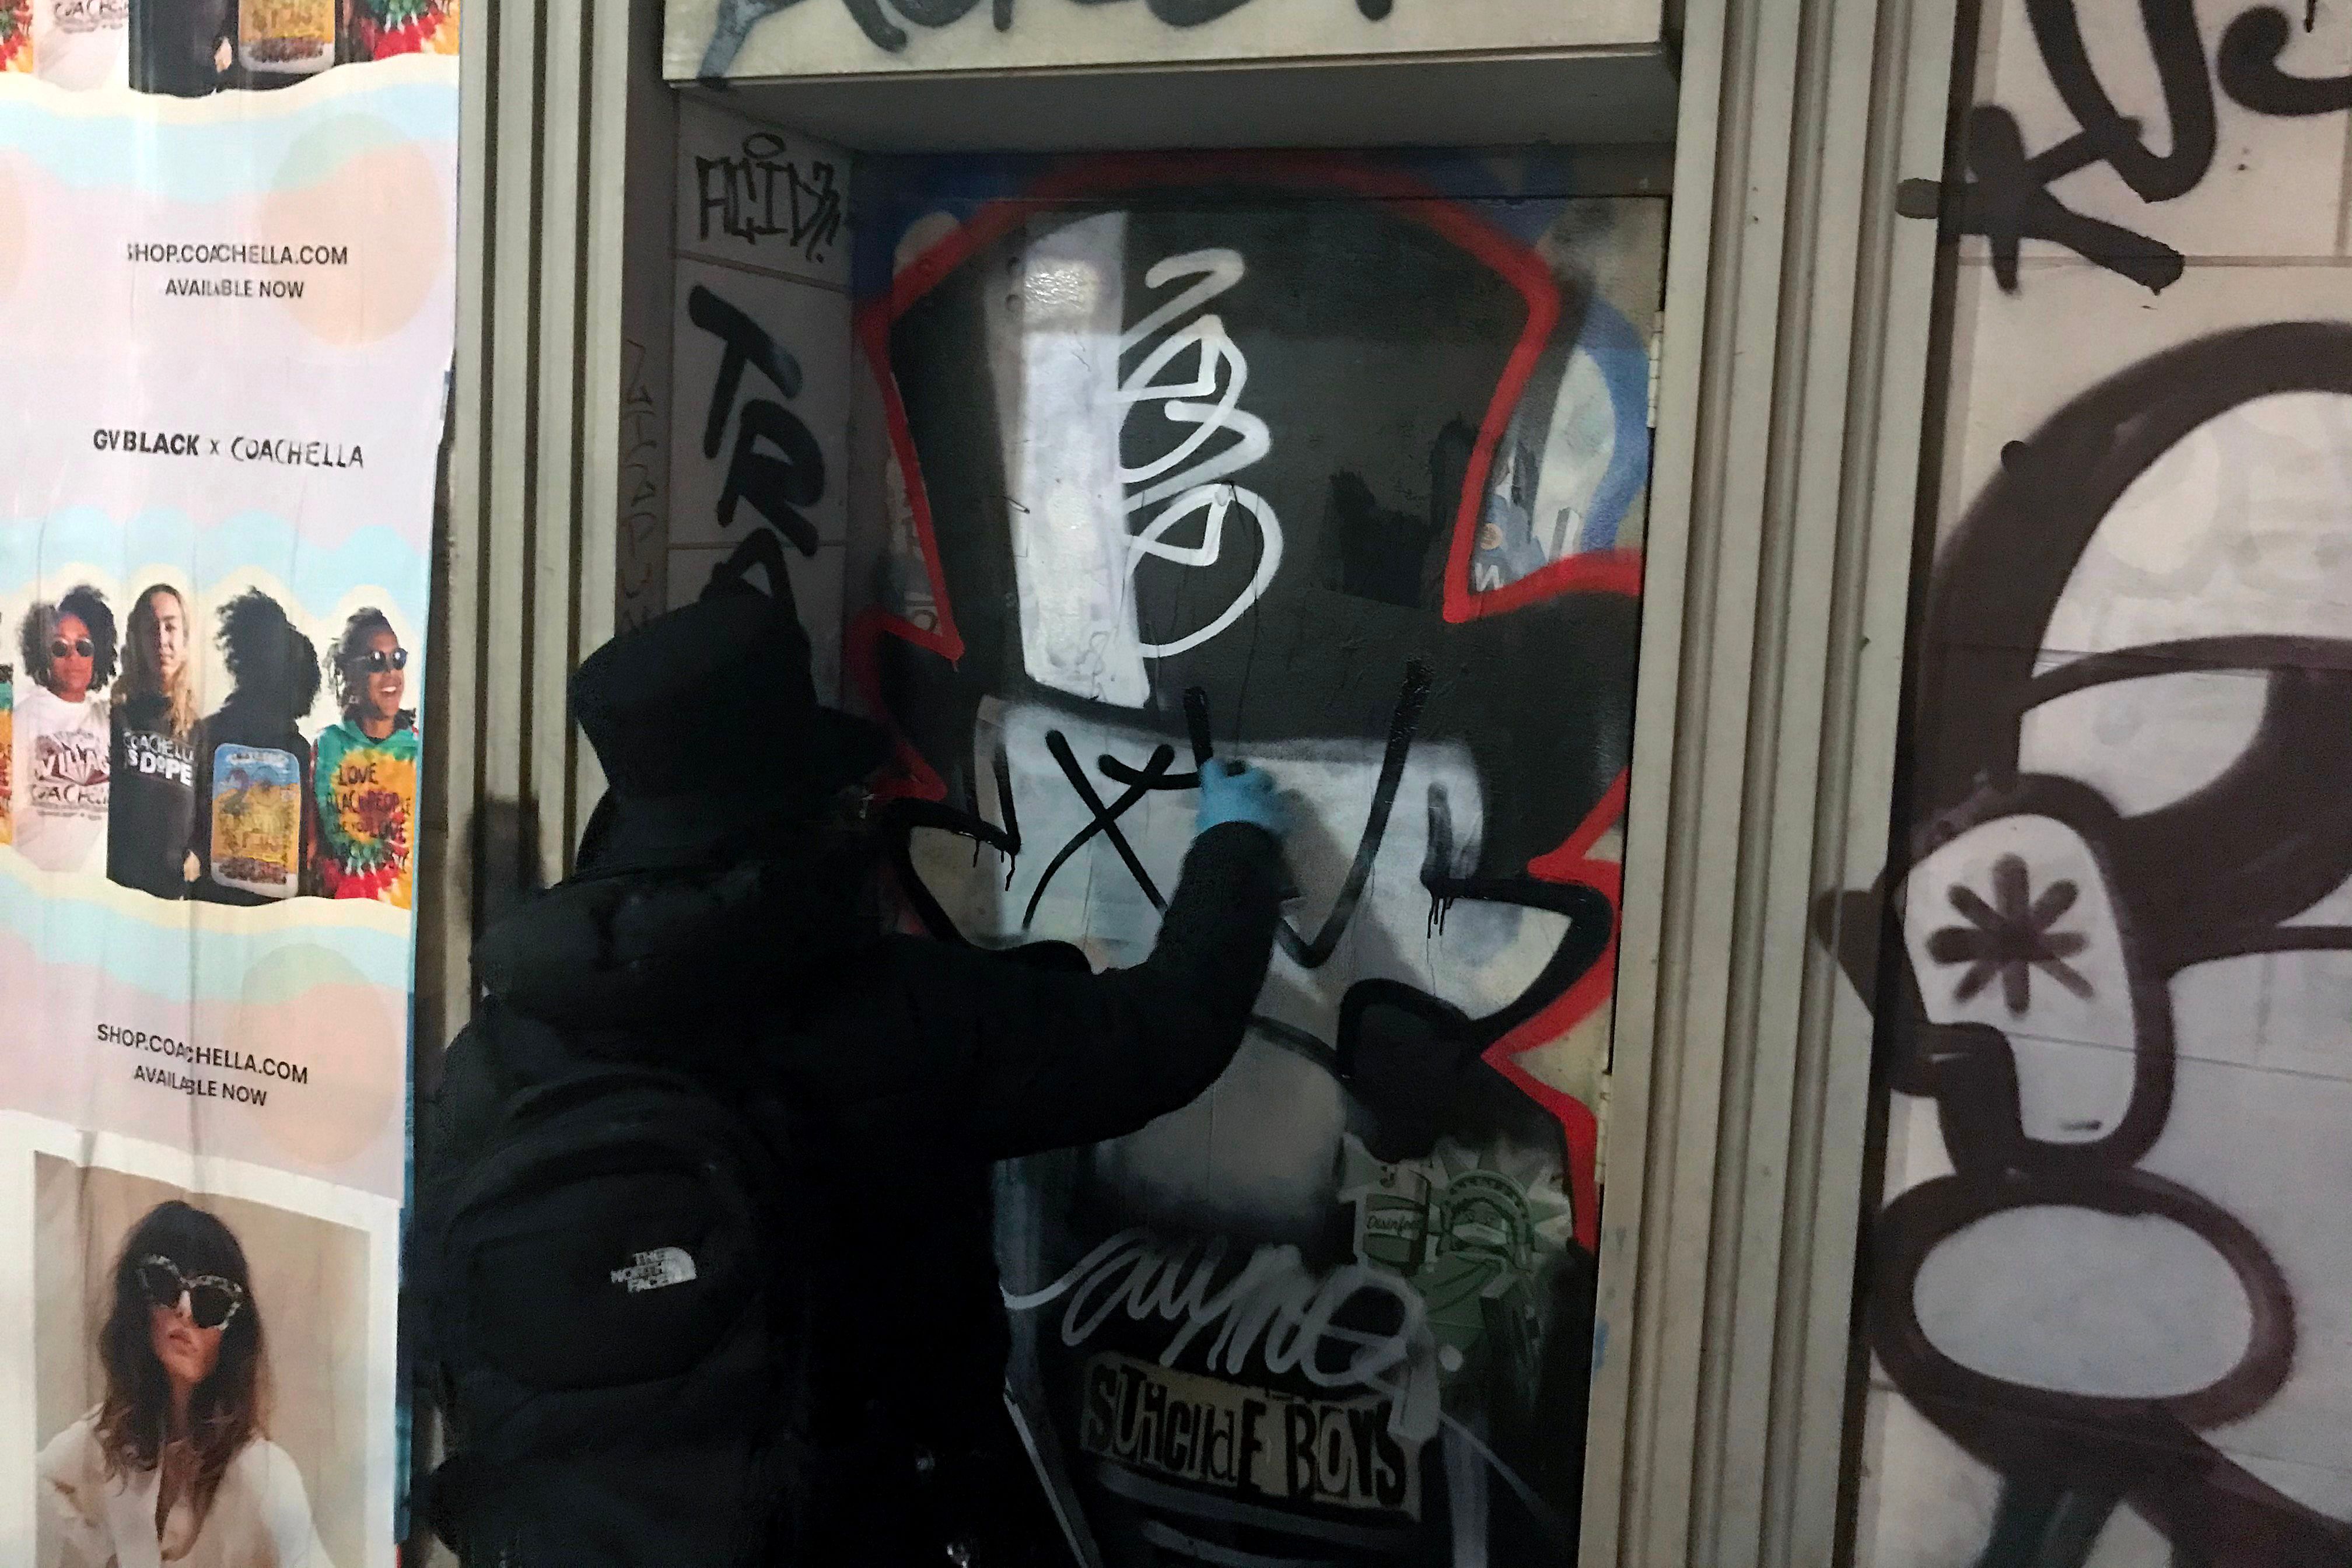 Graffiti artist "Saynosleep" paints a door in New York City. Credit: AFP Photo